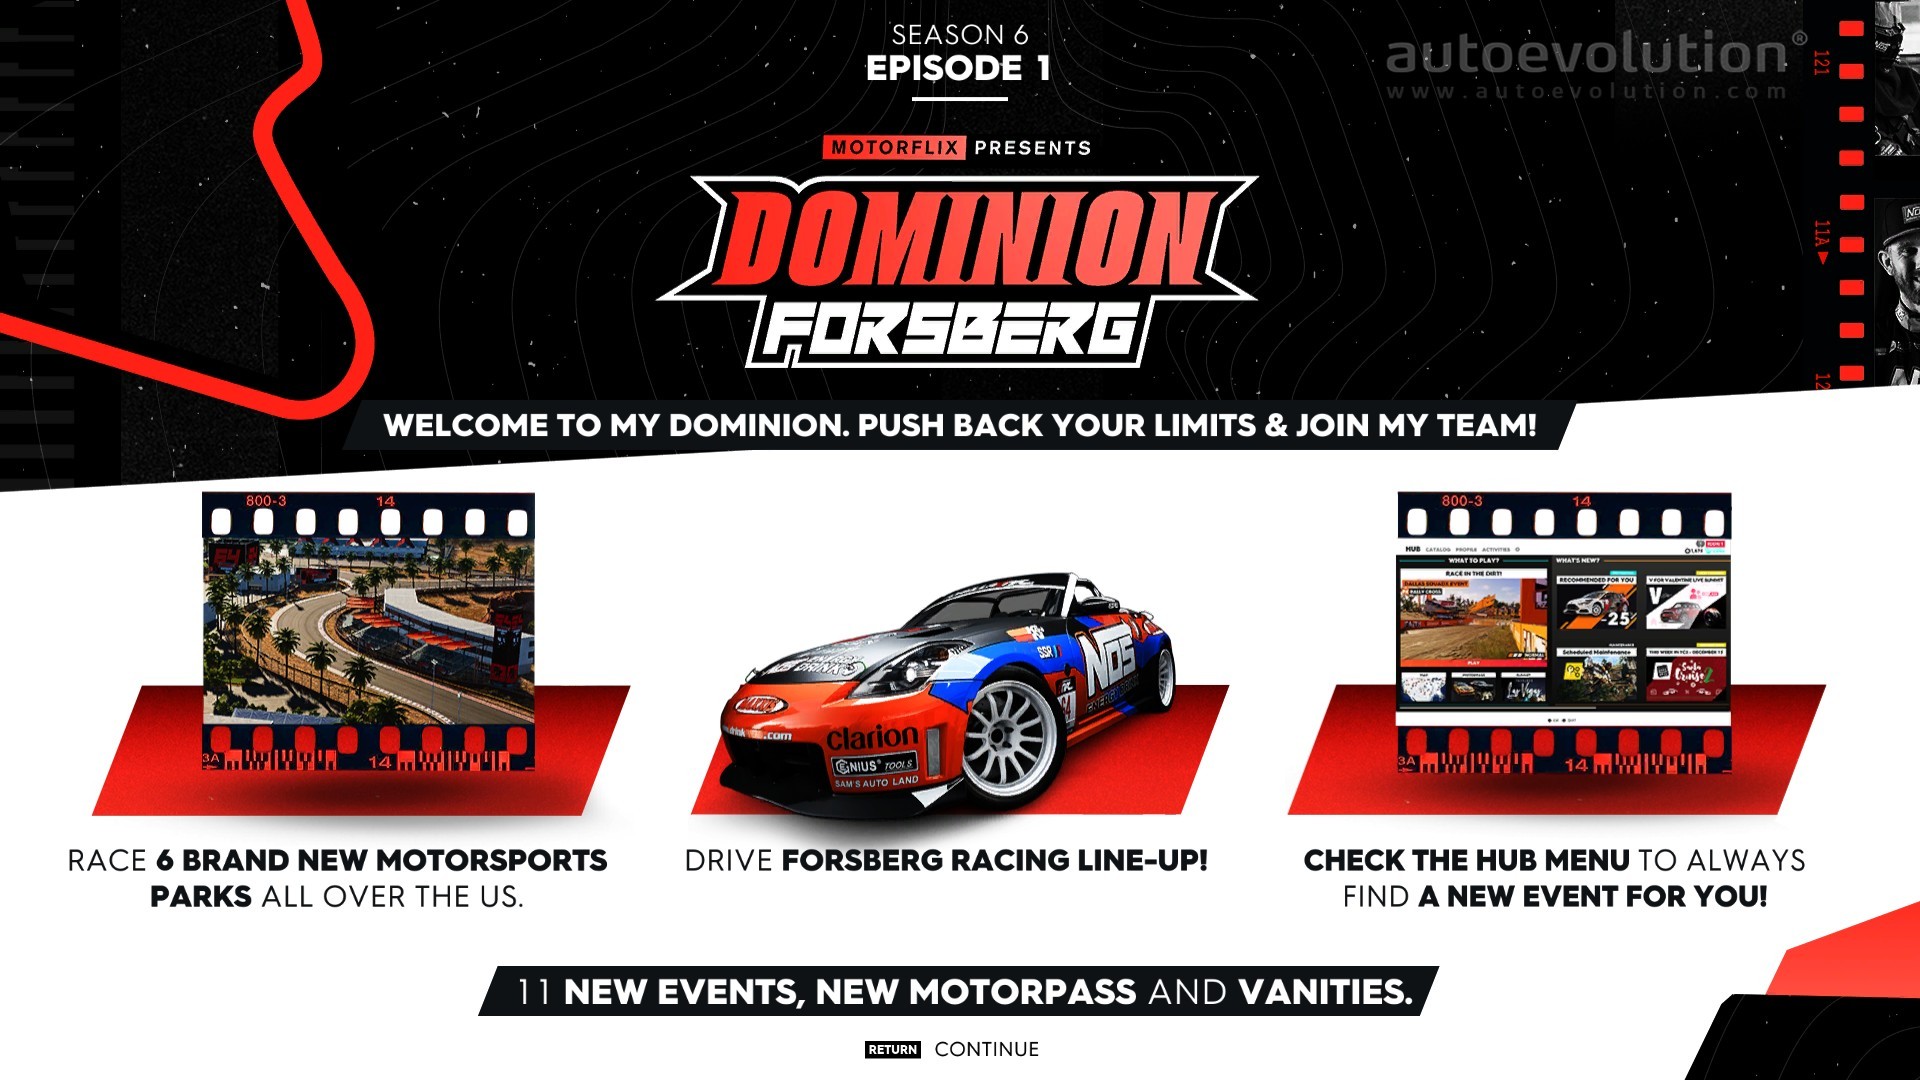 The Crew 2 Season 6 Episode 1 impressions -- Dominion Forsberg